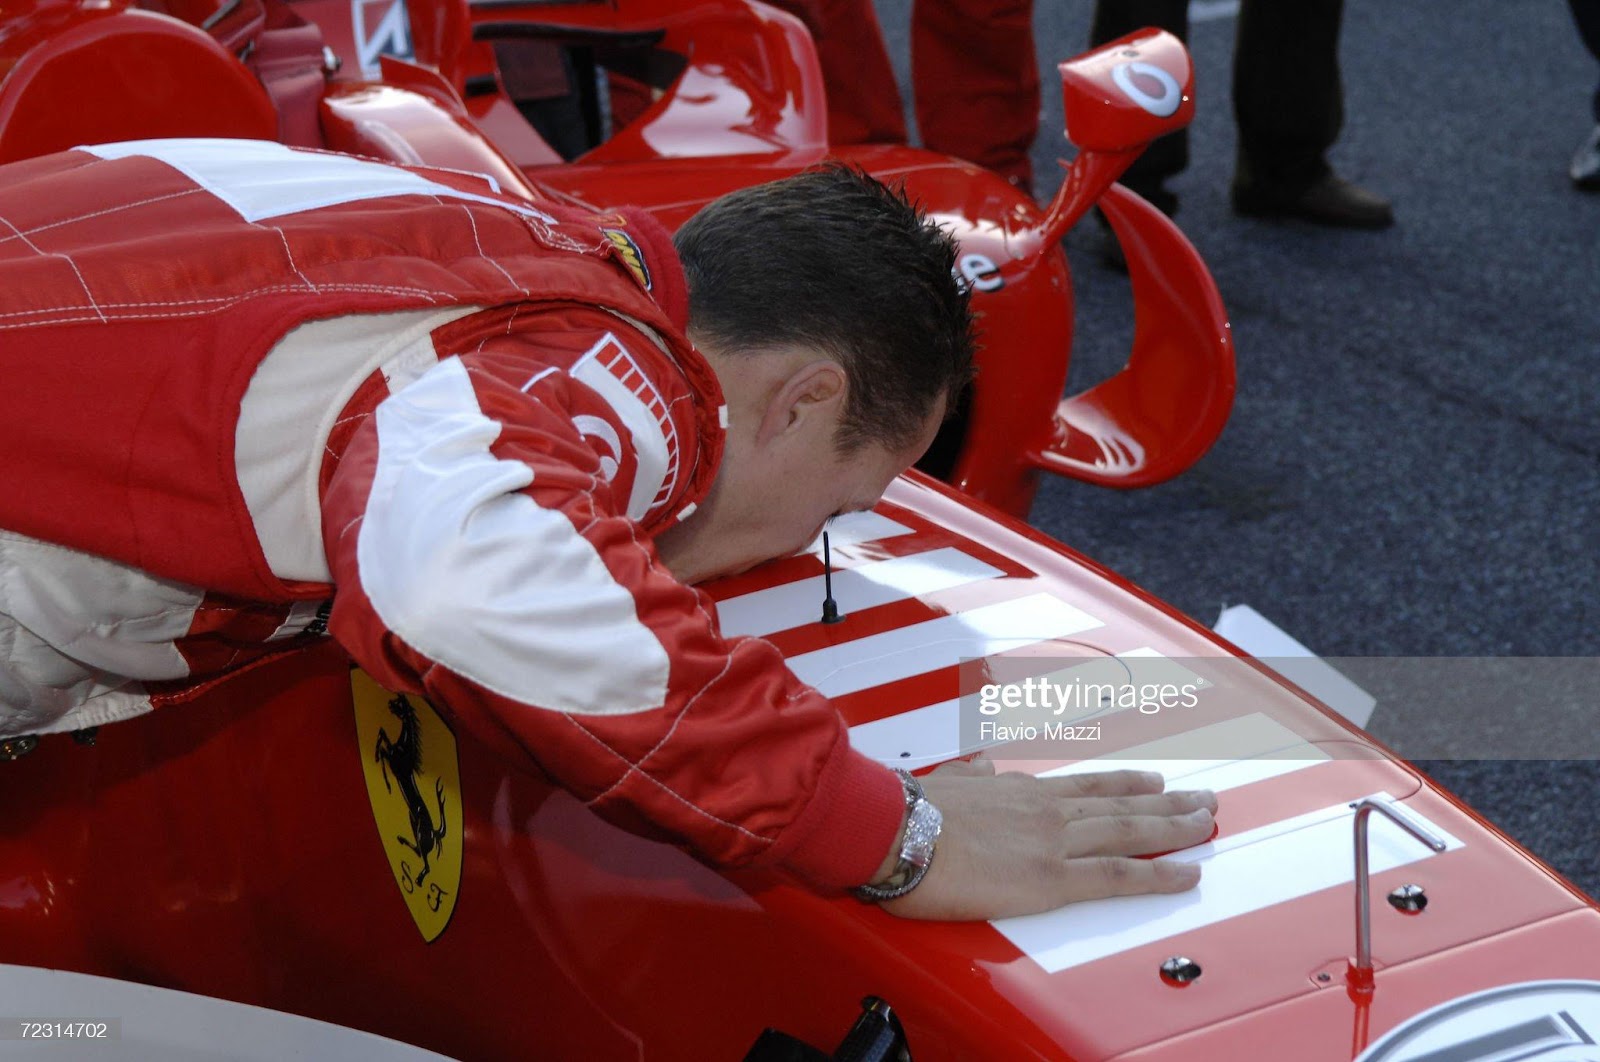 Michael Schumacher kisses his Ferrari during the Ferrari Days on October 29, 2006 in Monza, Italy.